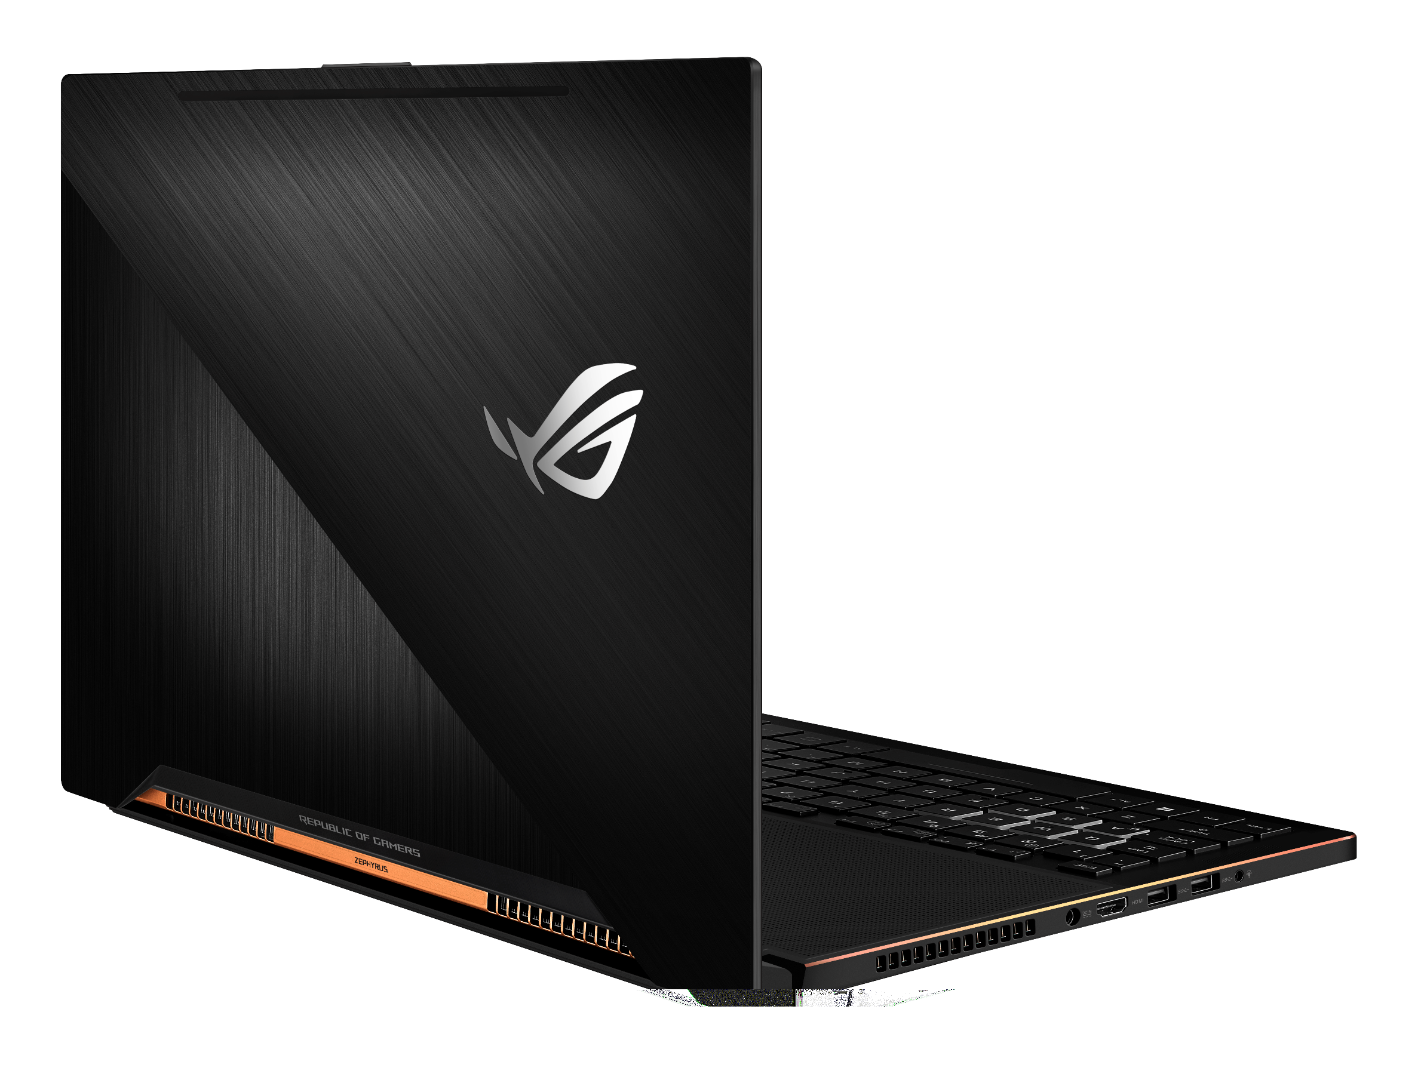 ASUS Reveals The Ultra-Slim ROG Zephyrus Laptop With GTX 1080 Max-Q